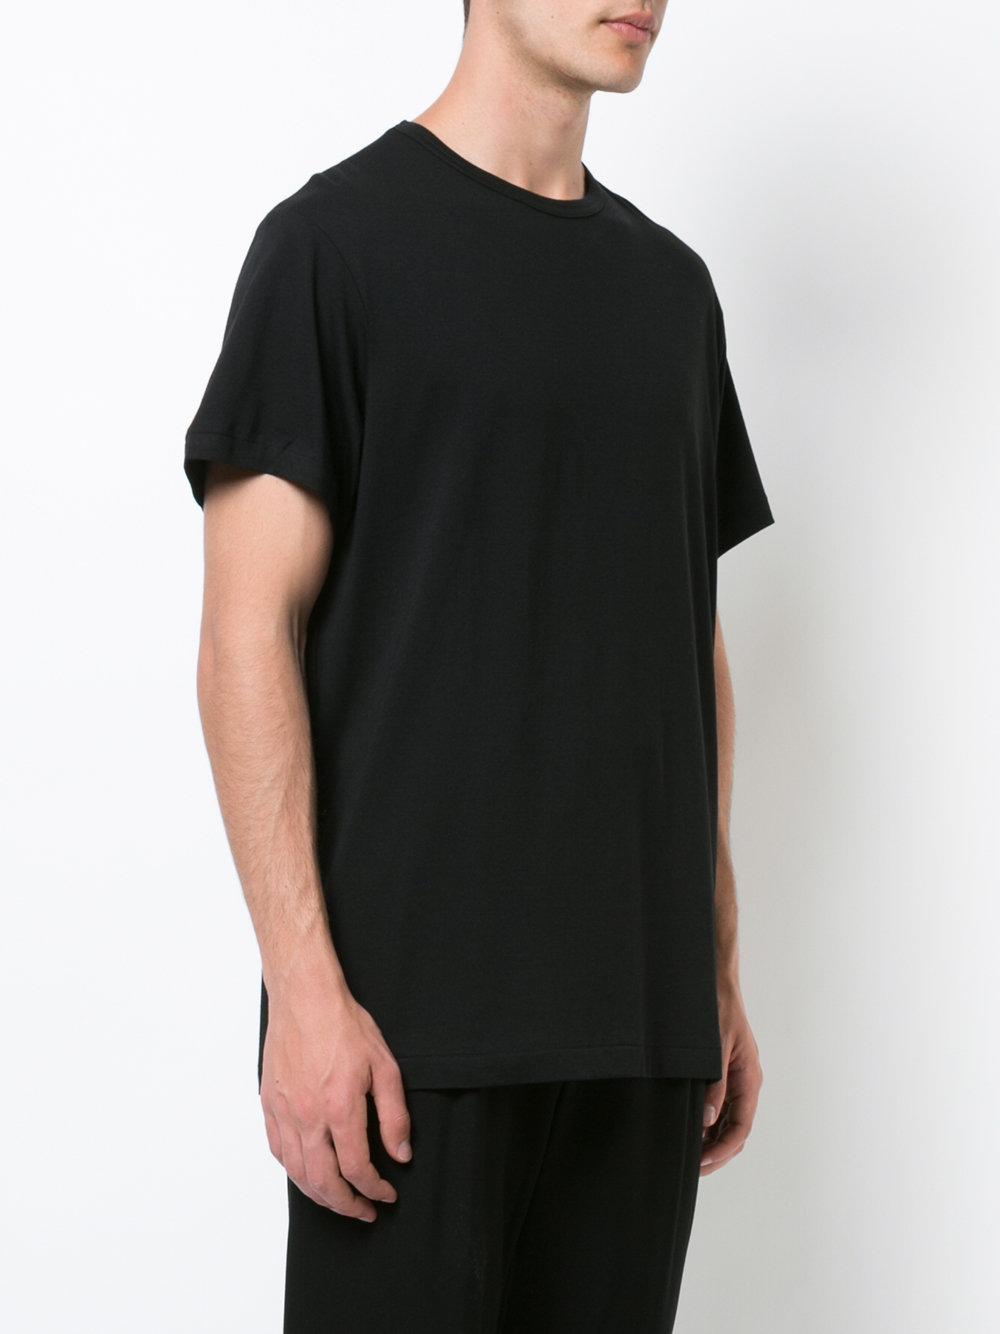 Yohji Yamamoto Cotton Staff T-shirt in Black for Men - Lyst